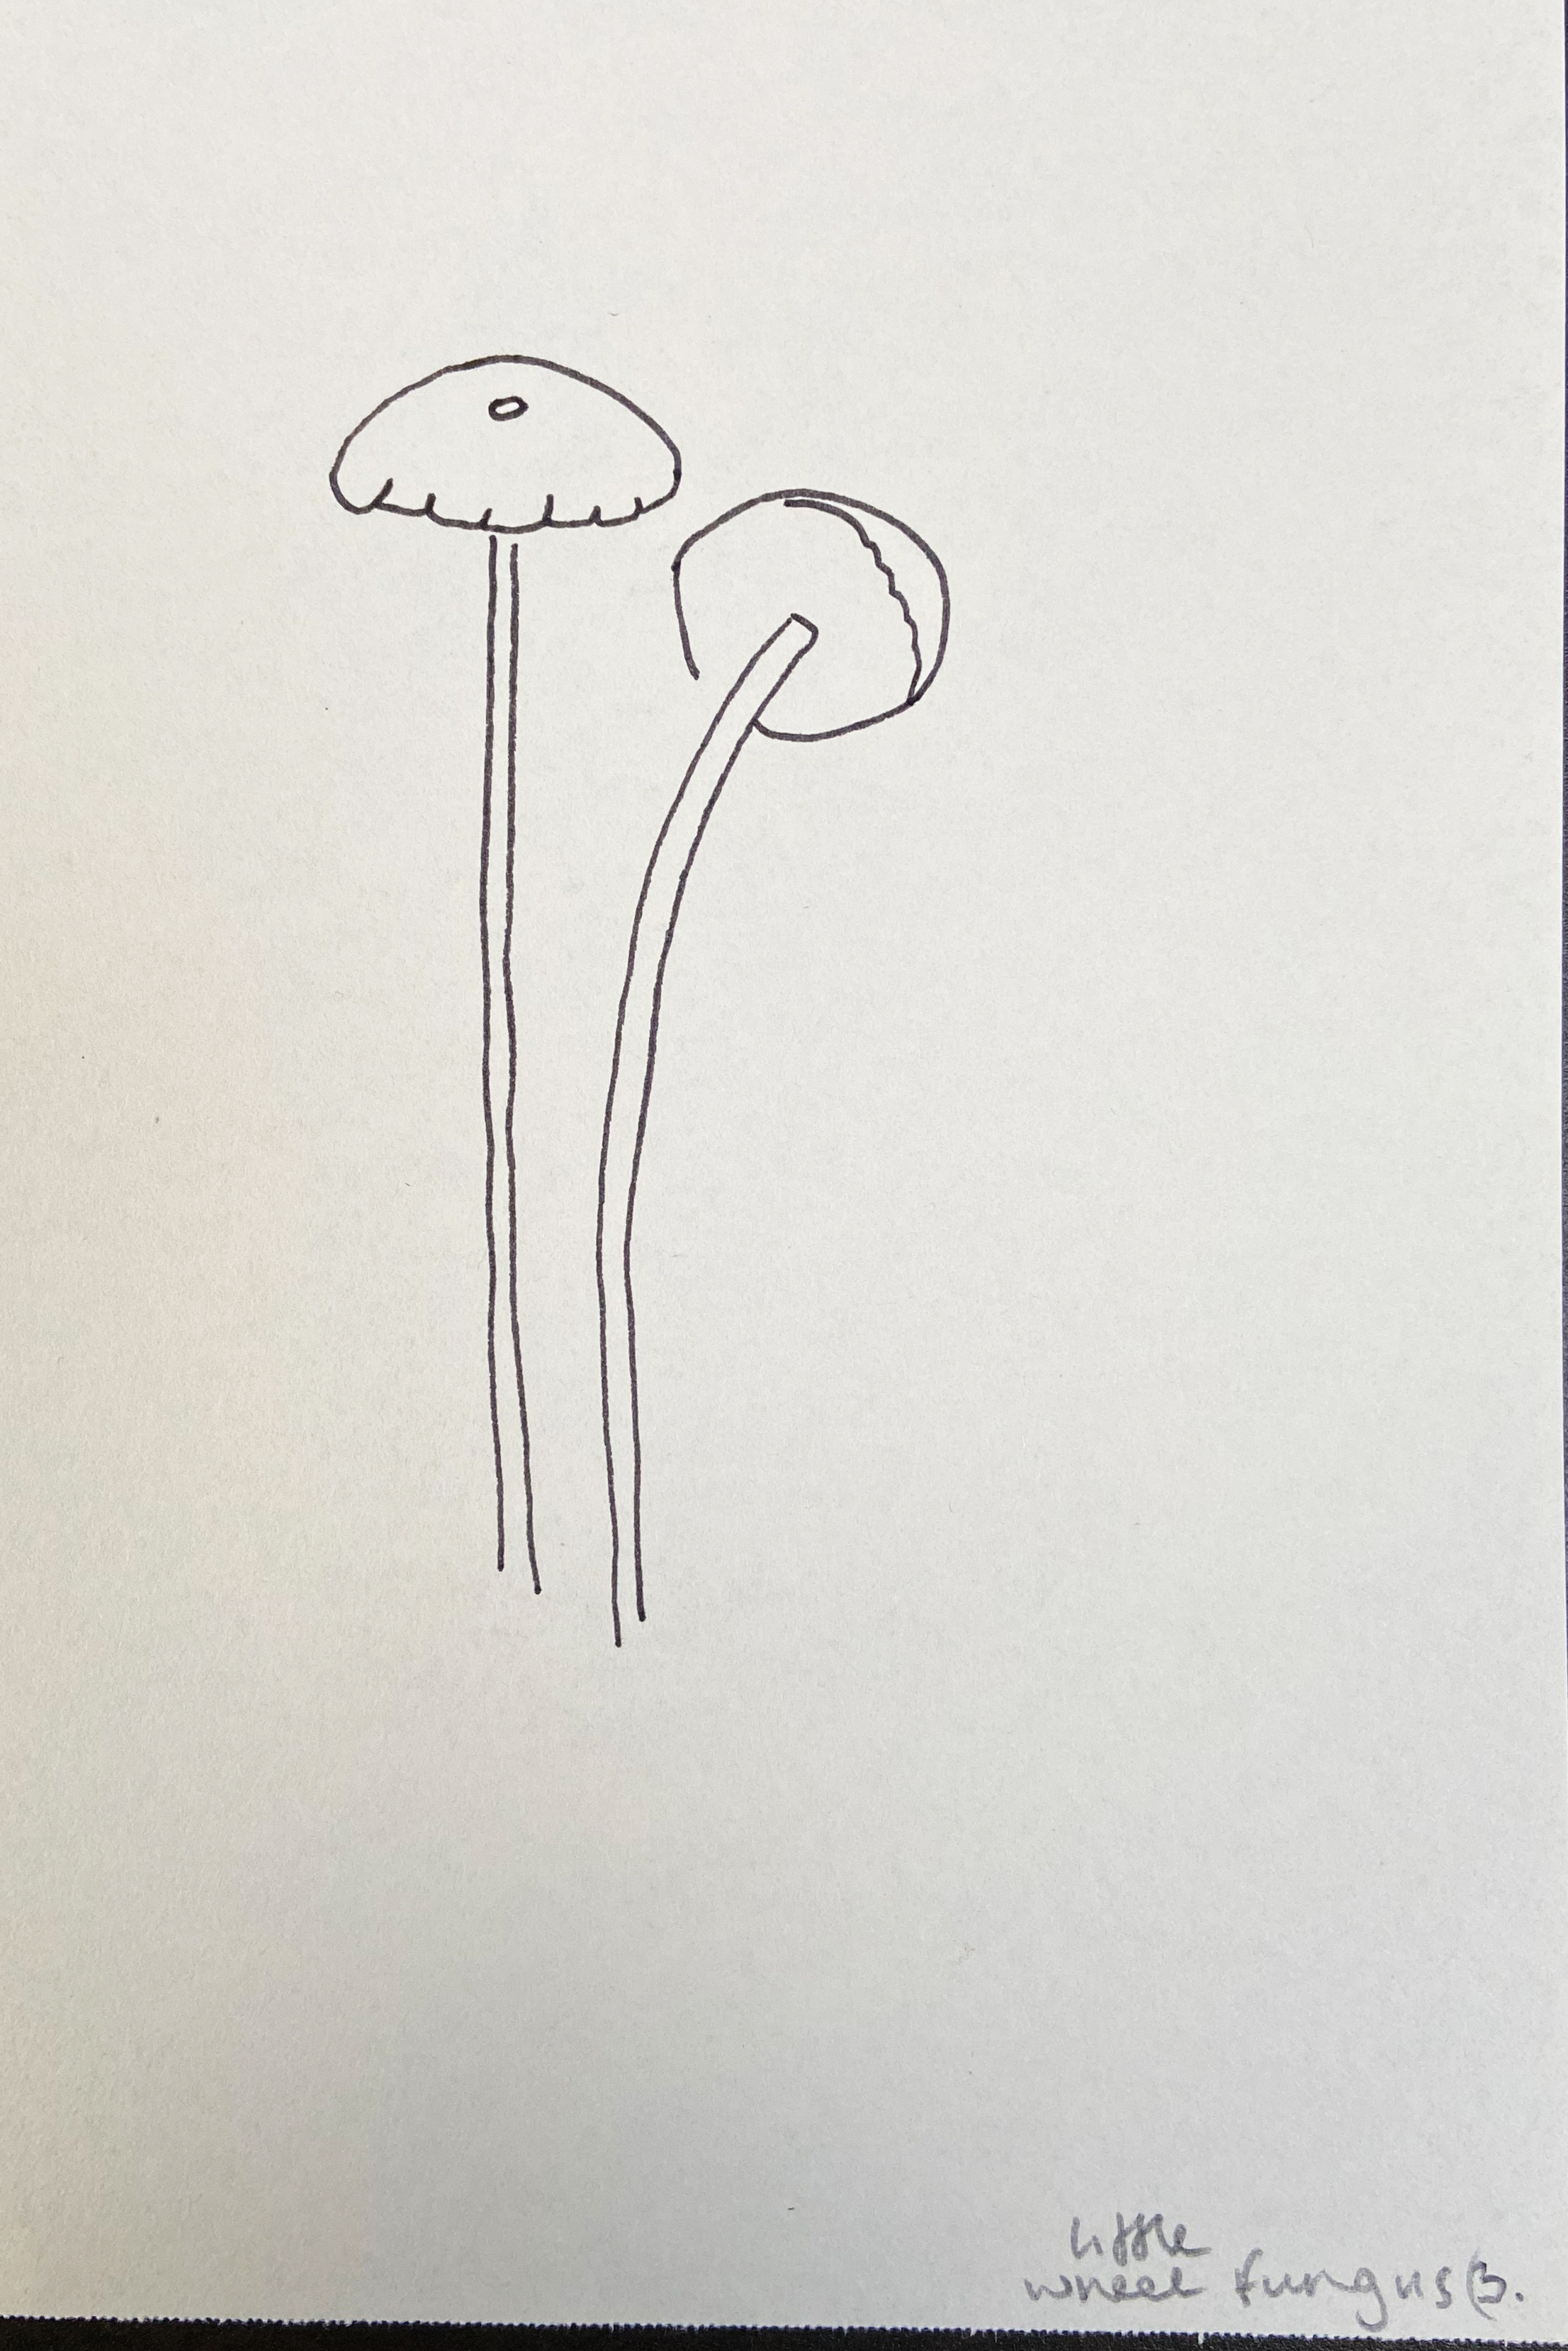 Little wheel fungus drawing step 3